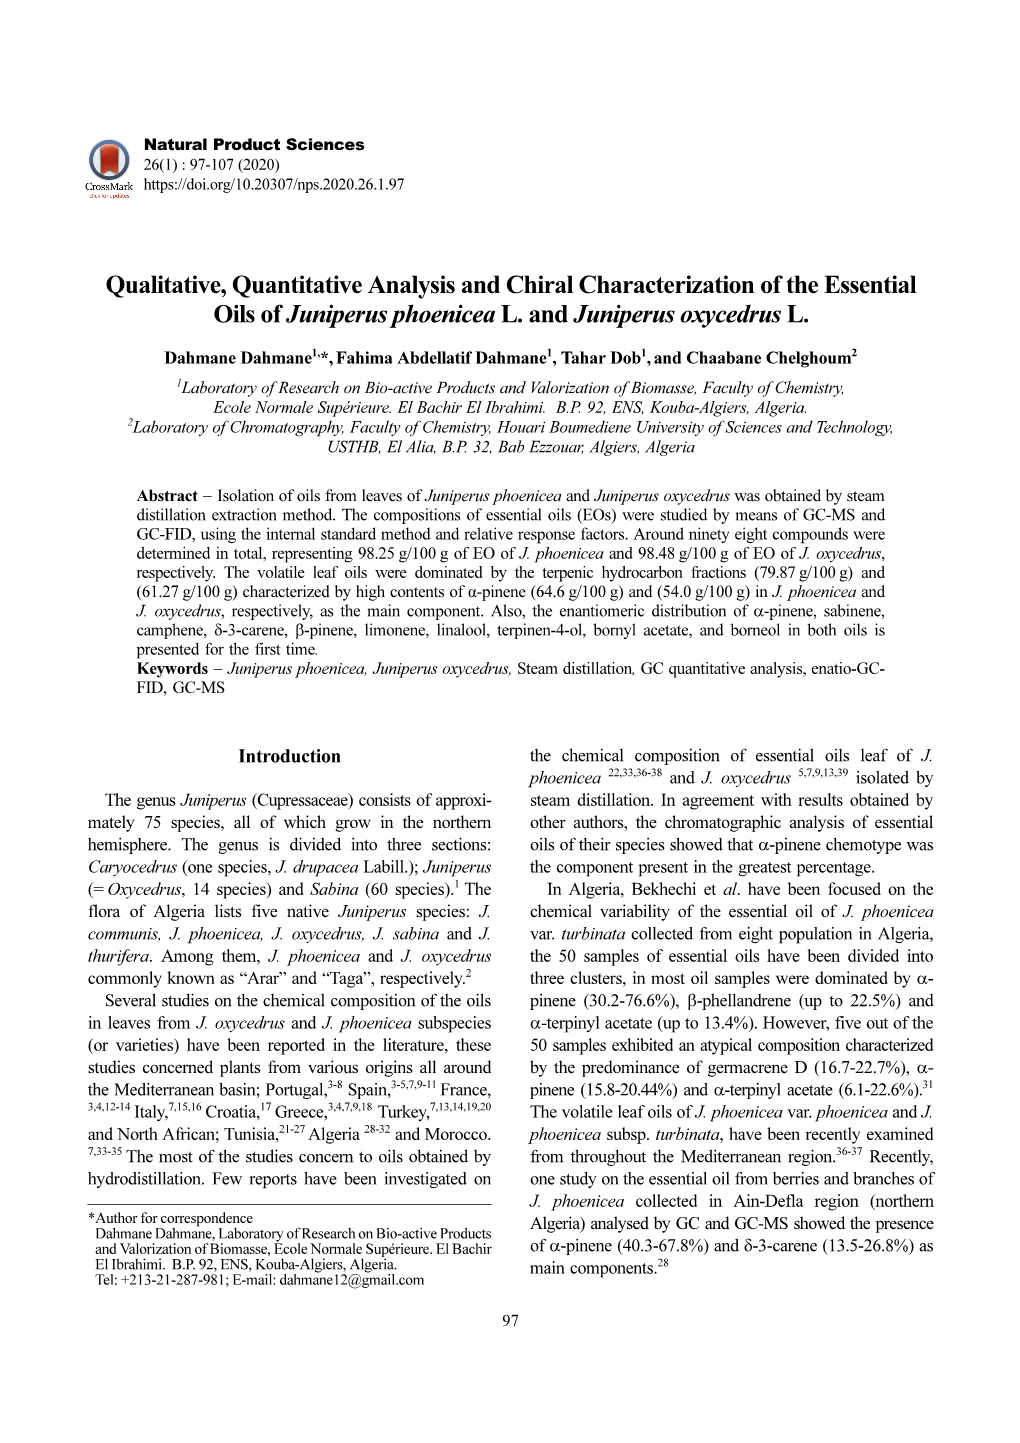 Qualitative, Quantitative Analysis and Chiral Characterization of the Essential Oils of Juniperus Phoenicea L. and Juniperus Oxycedrus L